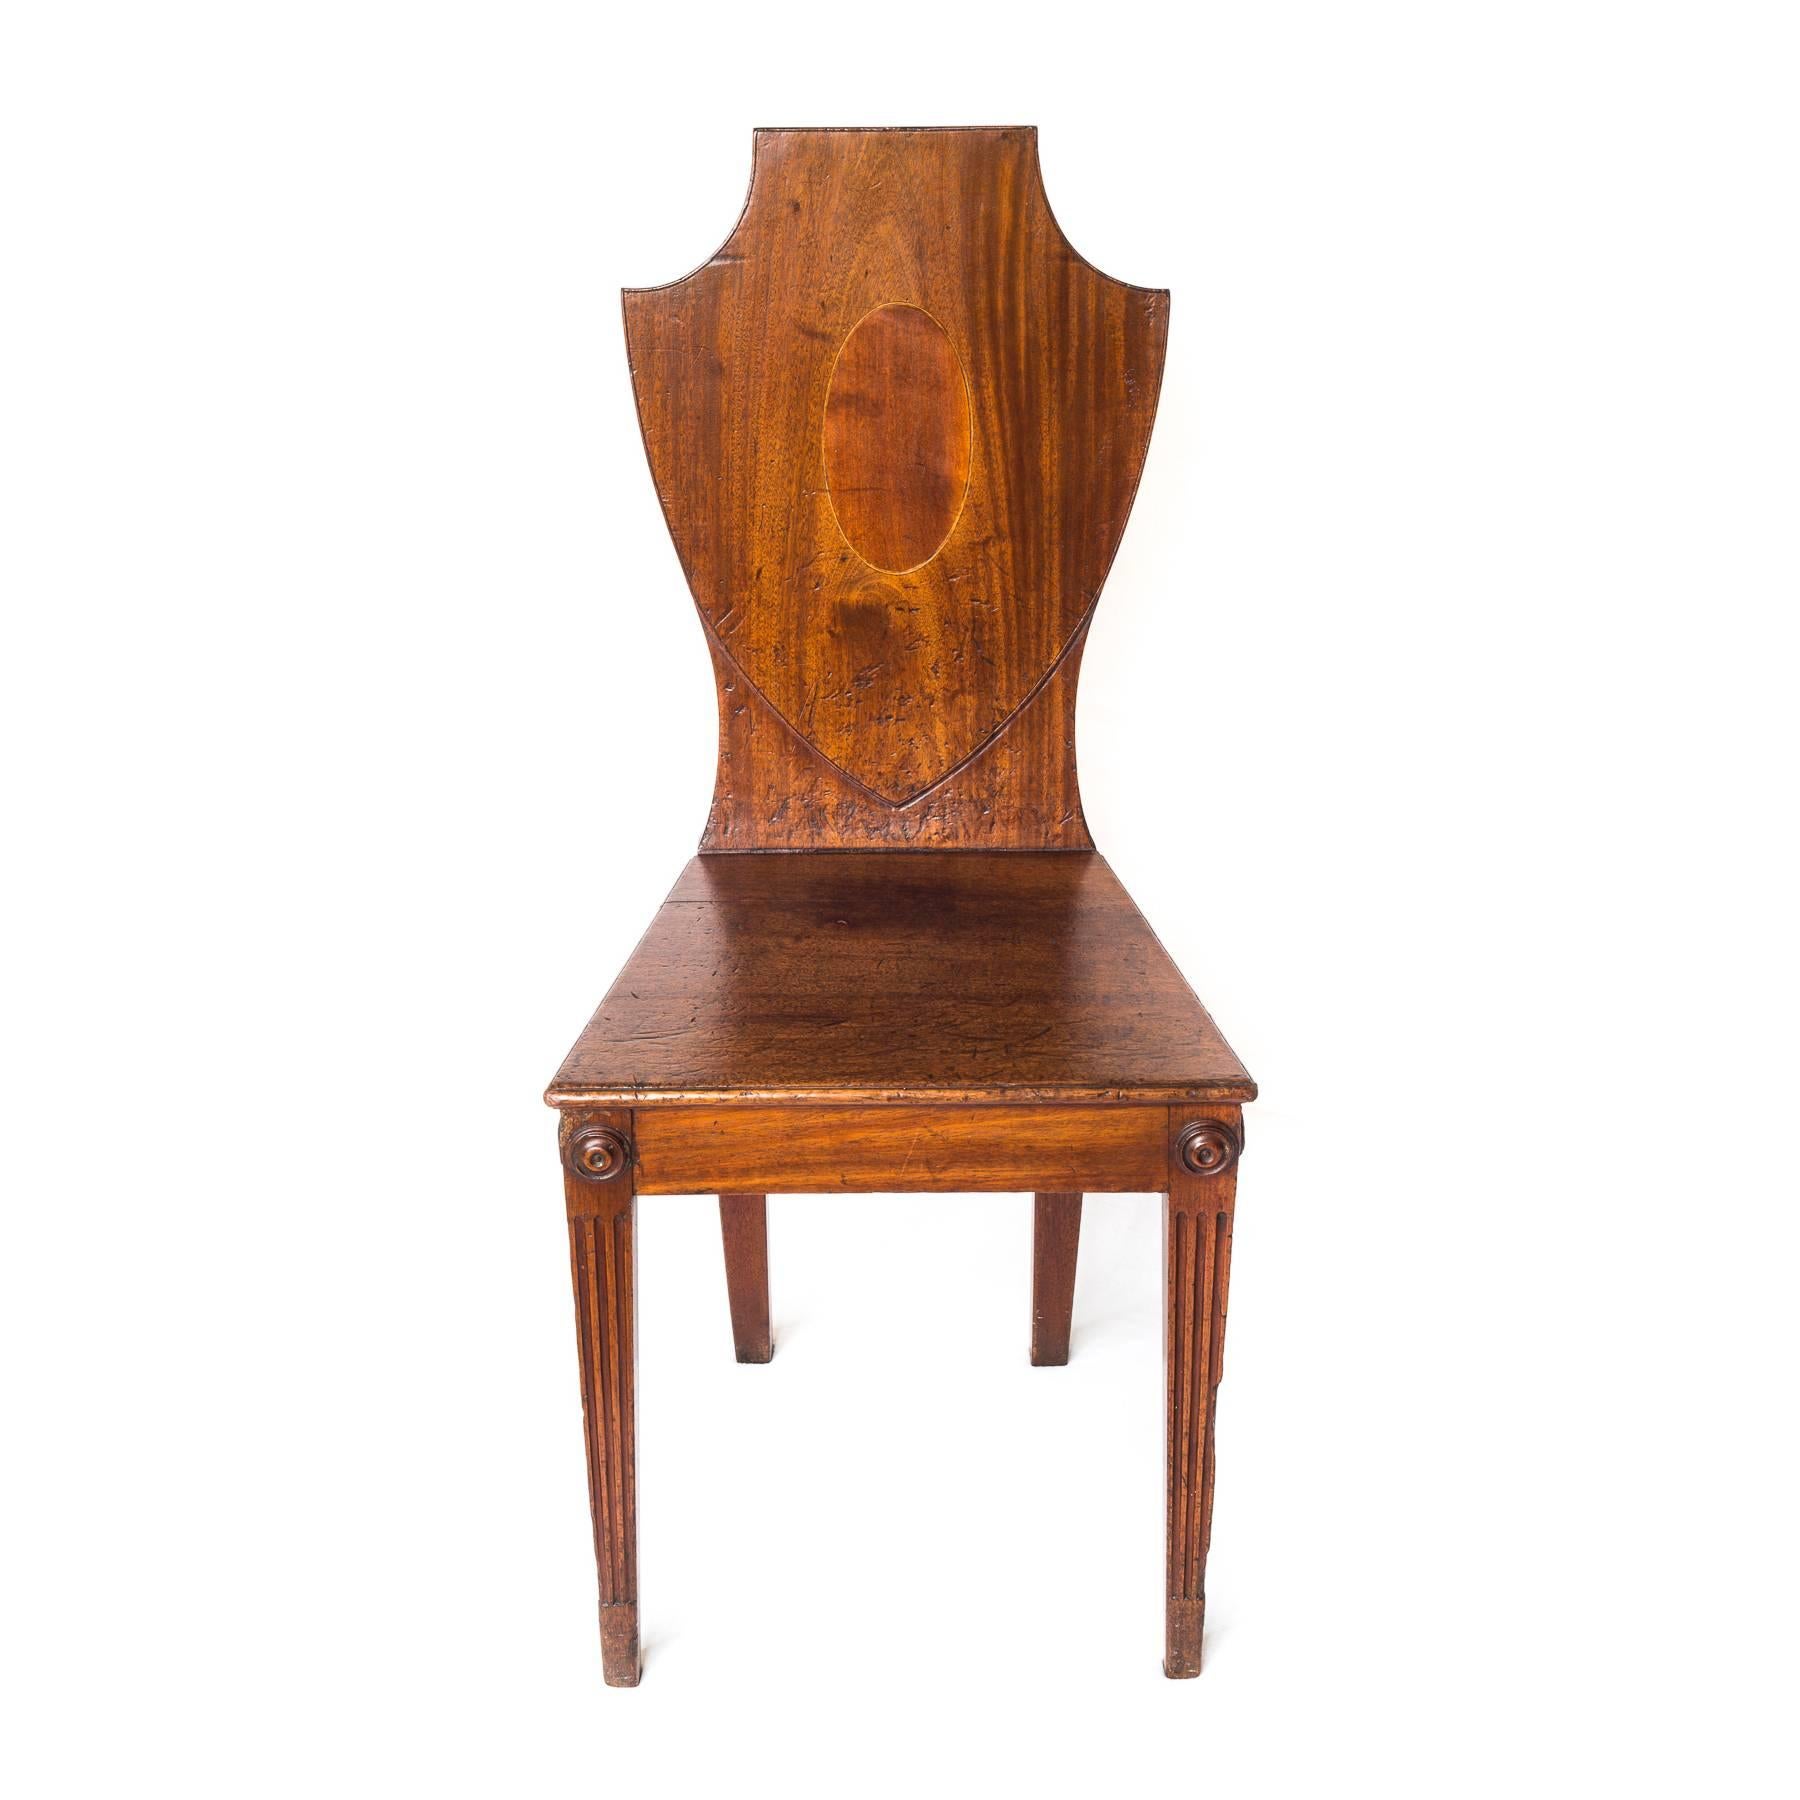 18th Century English Mahogany Hall Chair, c. 1790